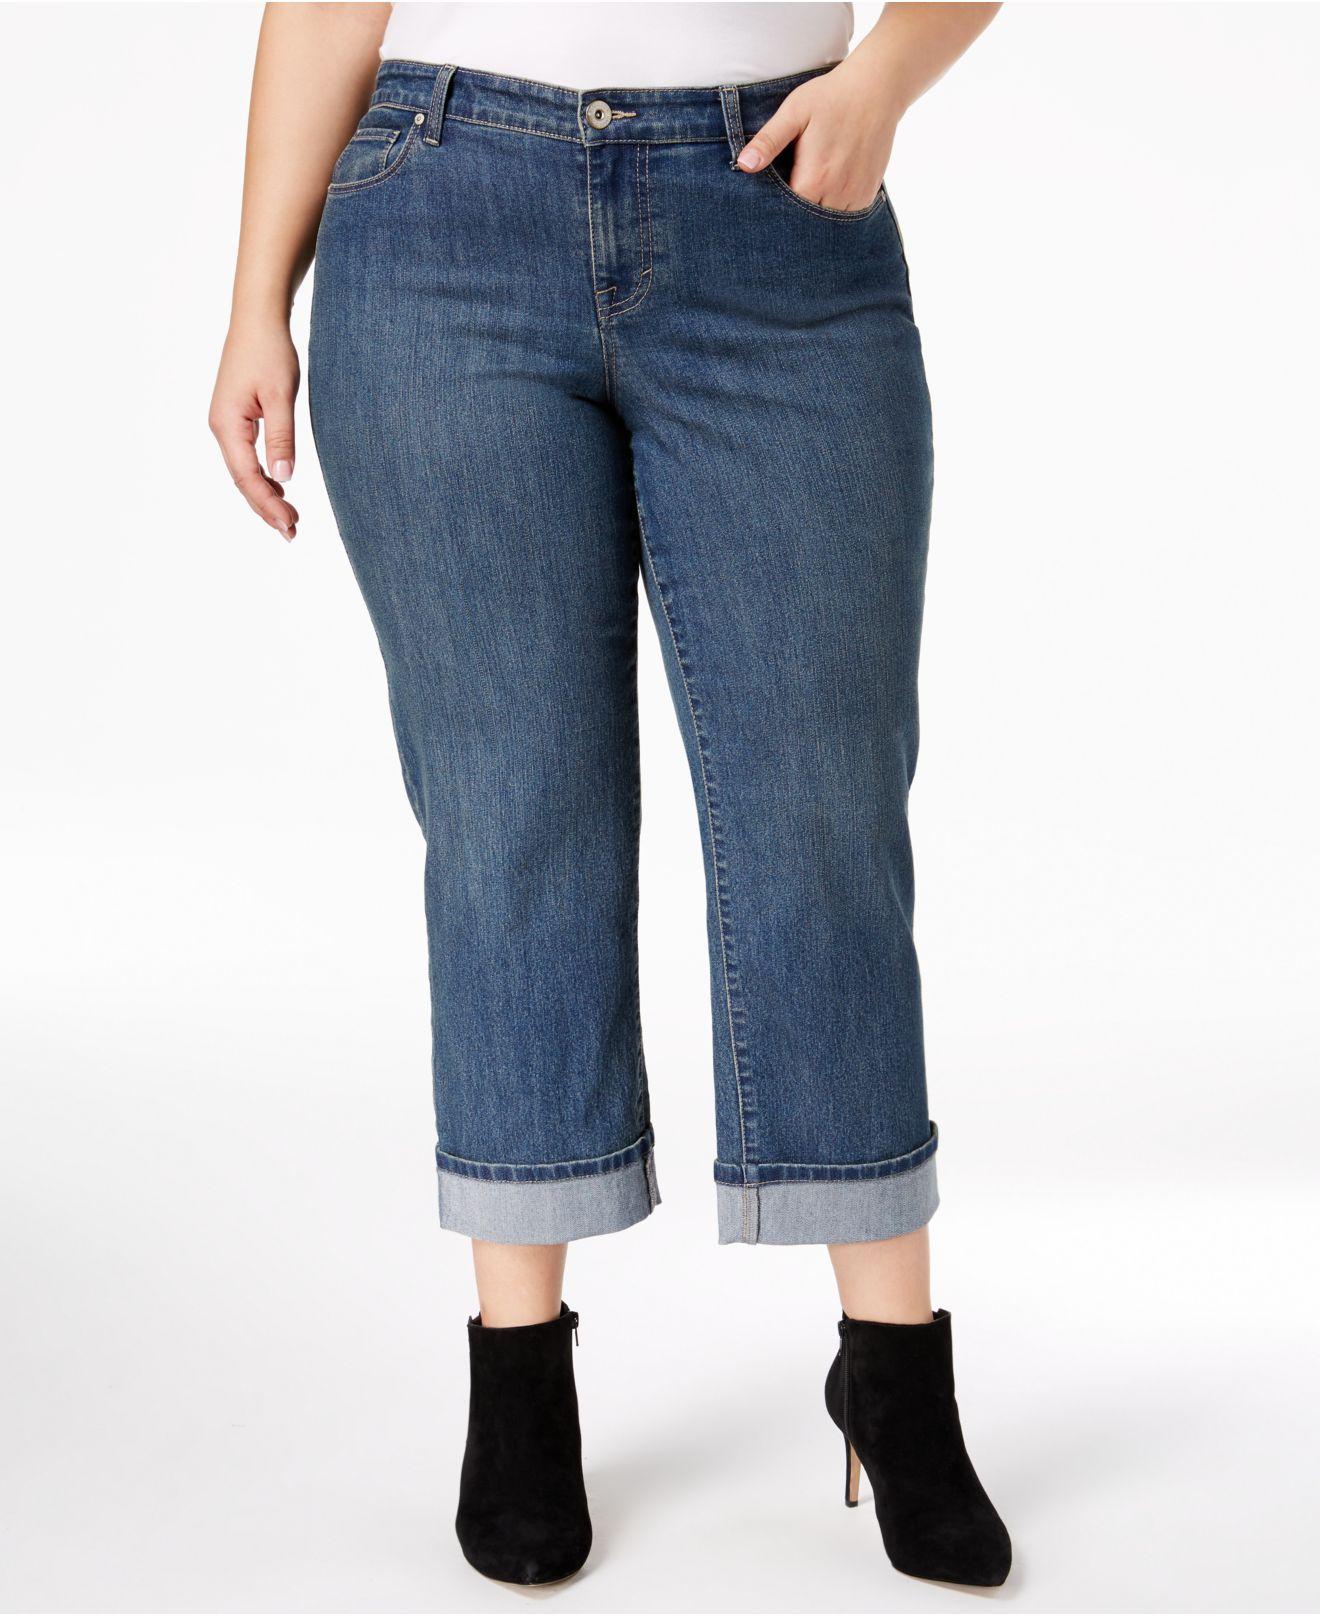 Lyst - Style & Co. Plus Size Cuffed Capri Jeans in Blue